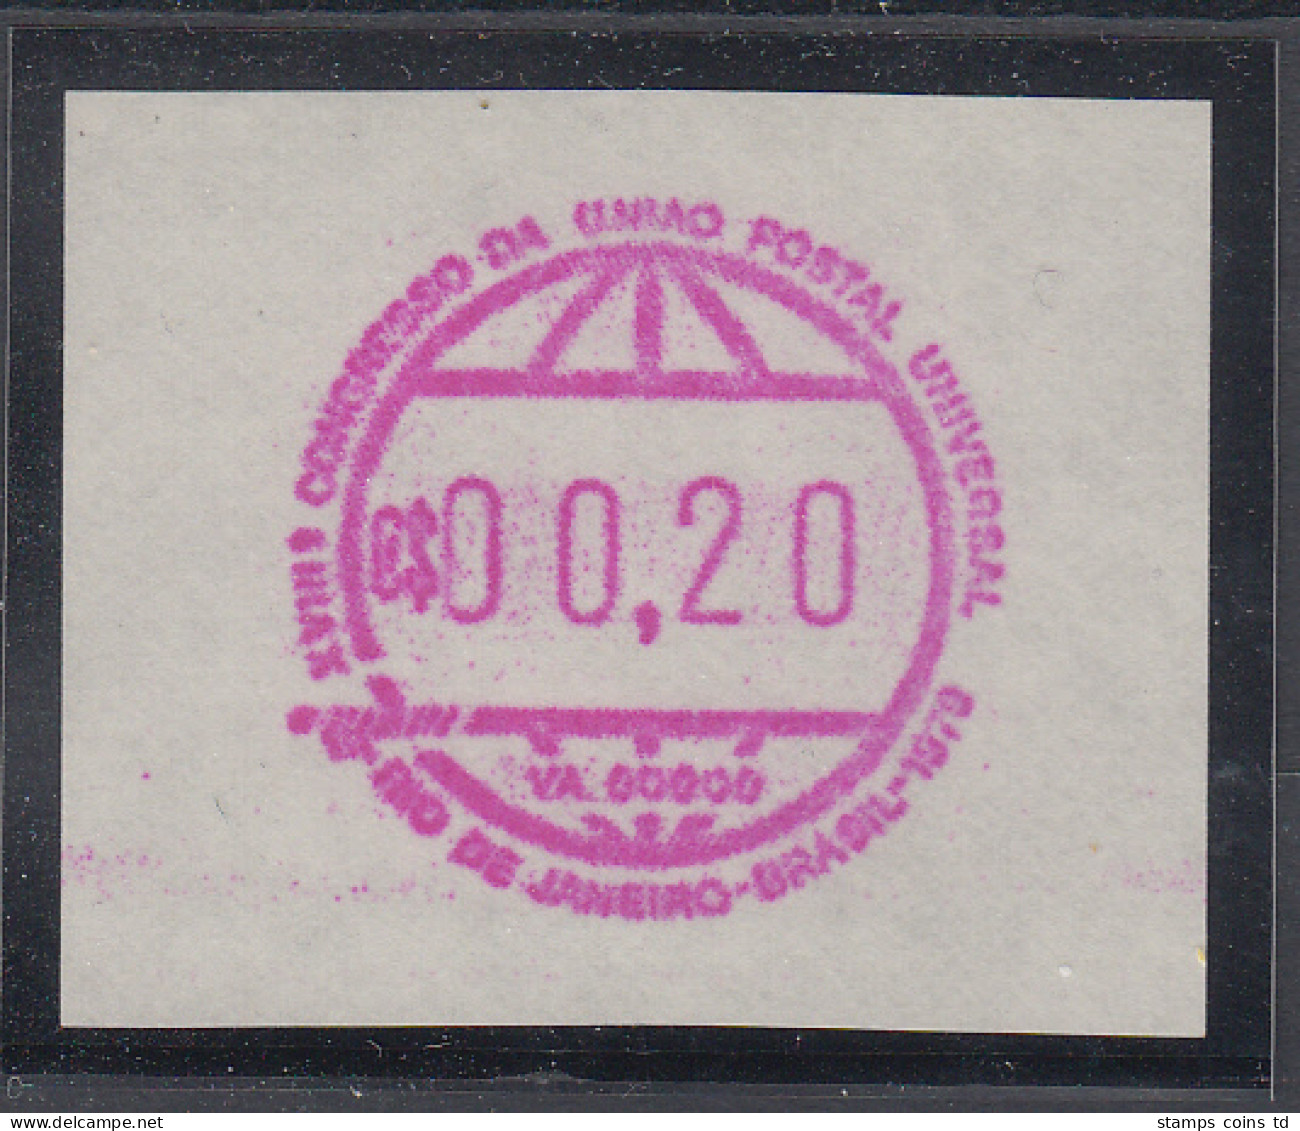 Brasilien FRAMA Sonder-ATM UPU-Kongress 1979, Wertstufe 00,20 Cr$ **, Mi.-Nr. 1 - Affrancature Meccaniche/Frama